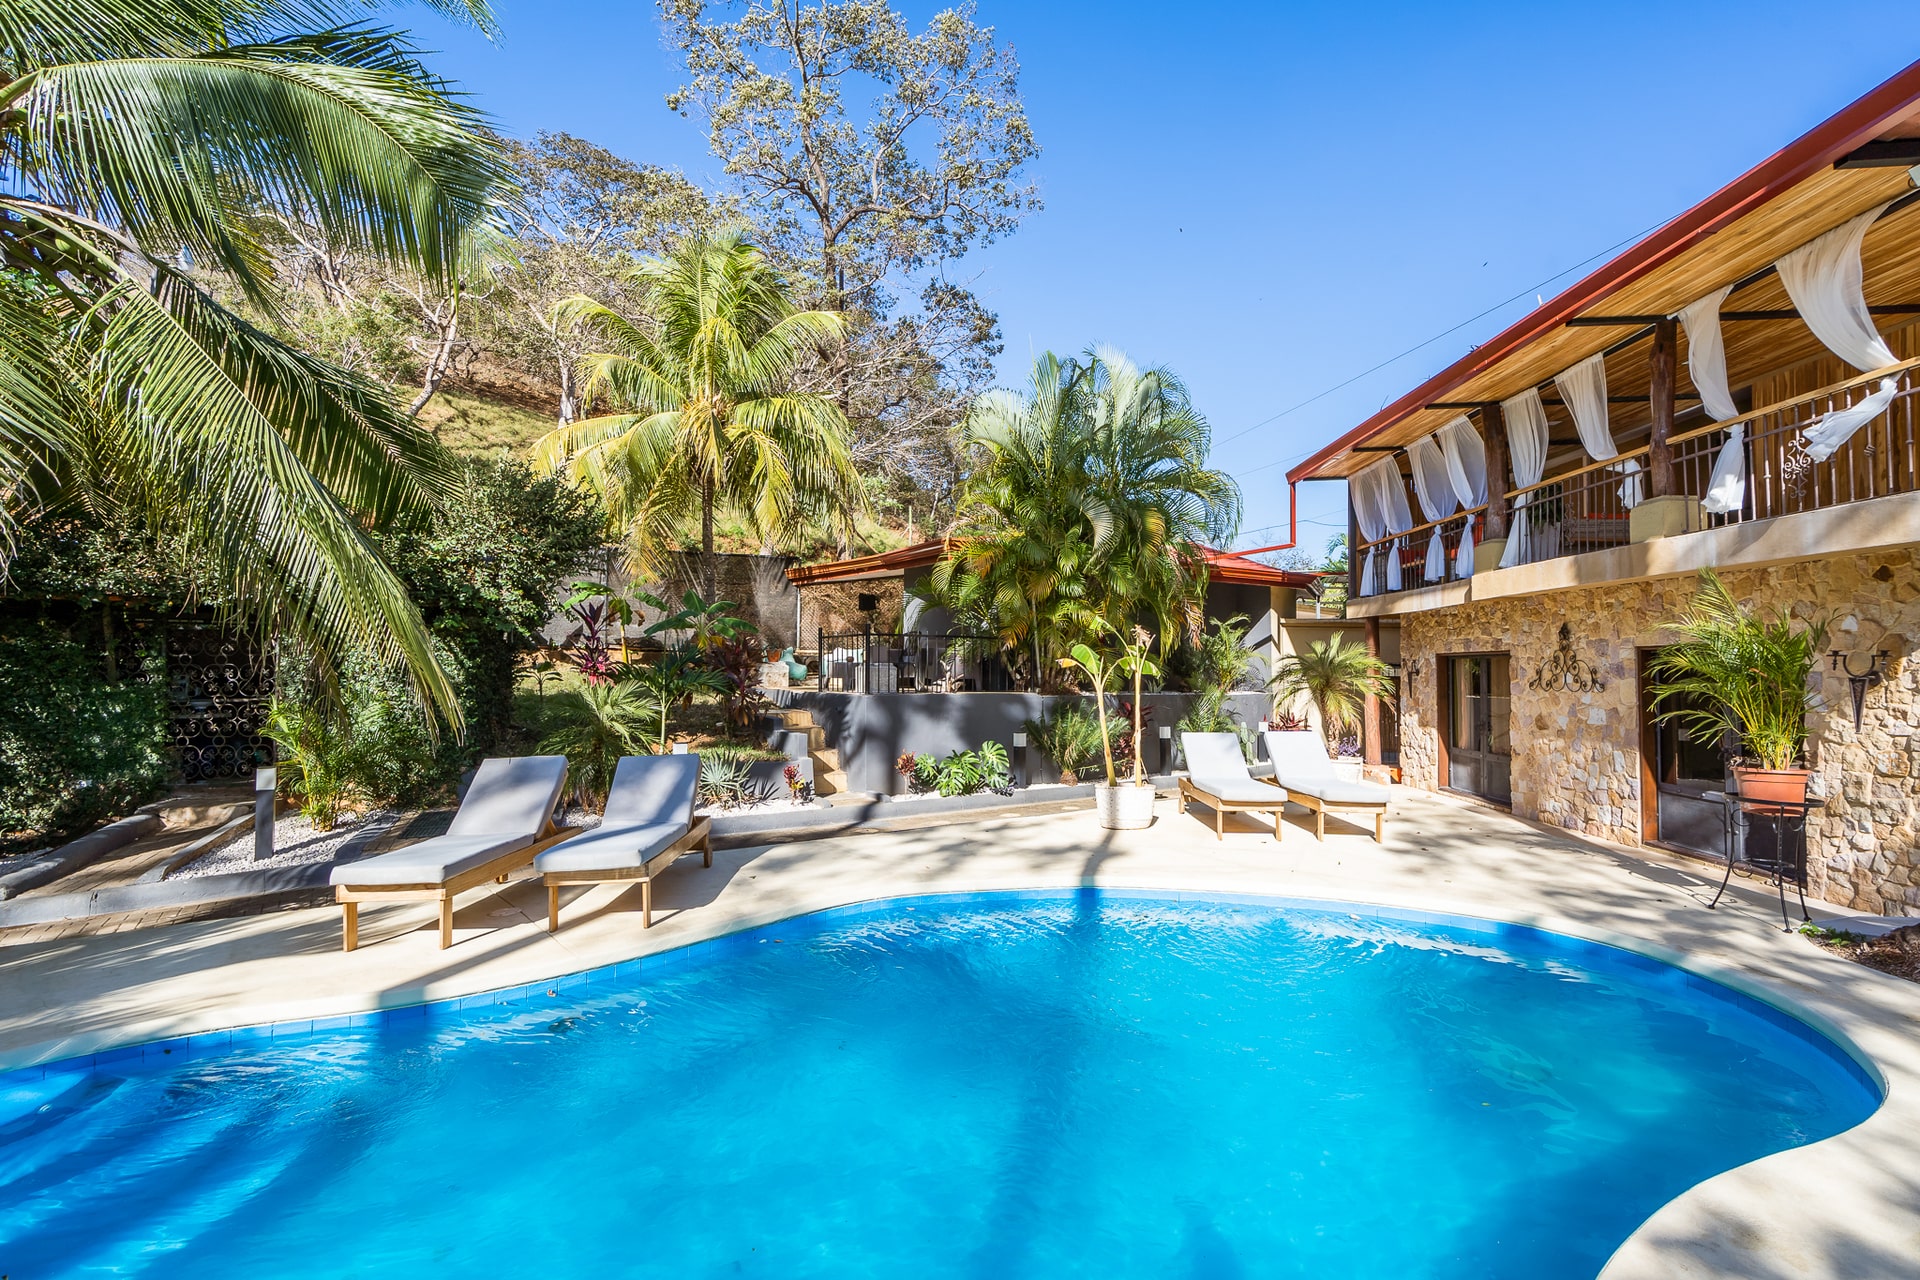 Villa La Paz – Great Investment Property!